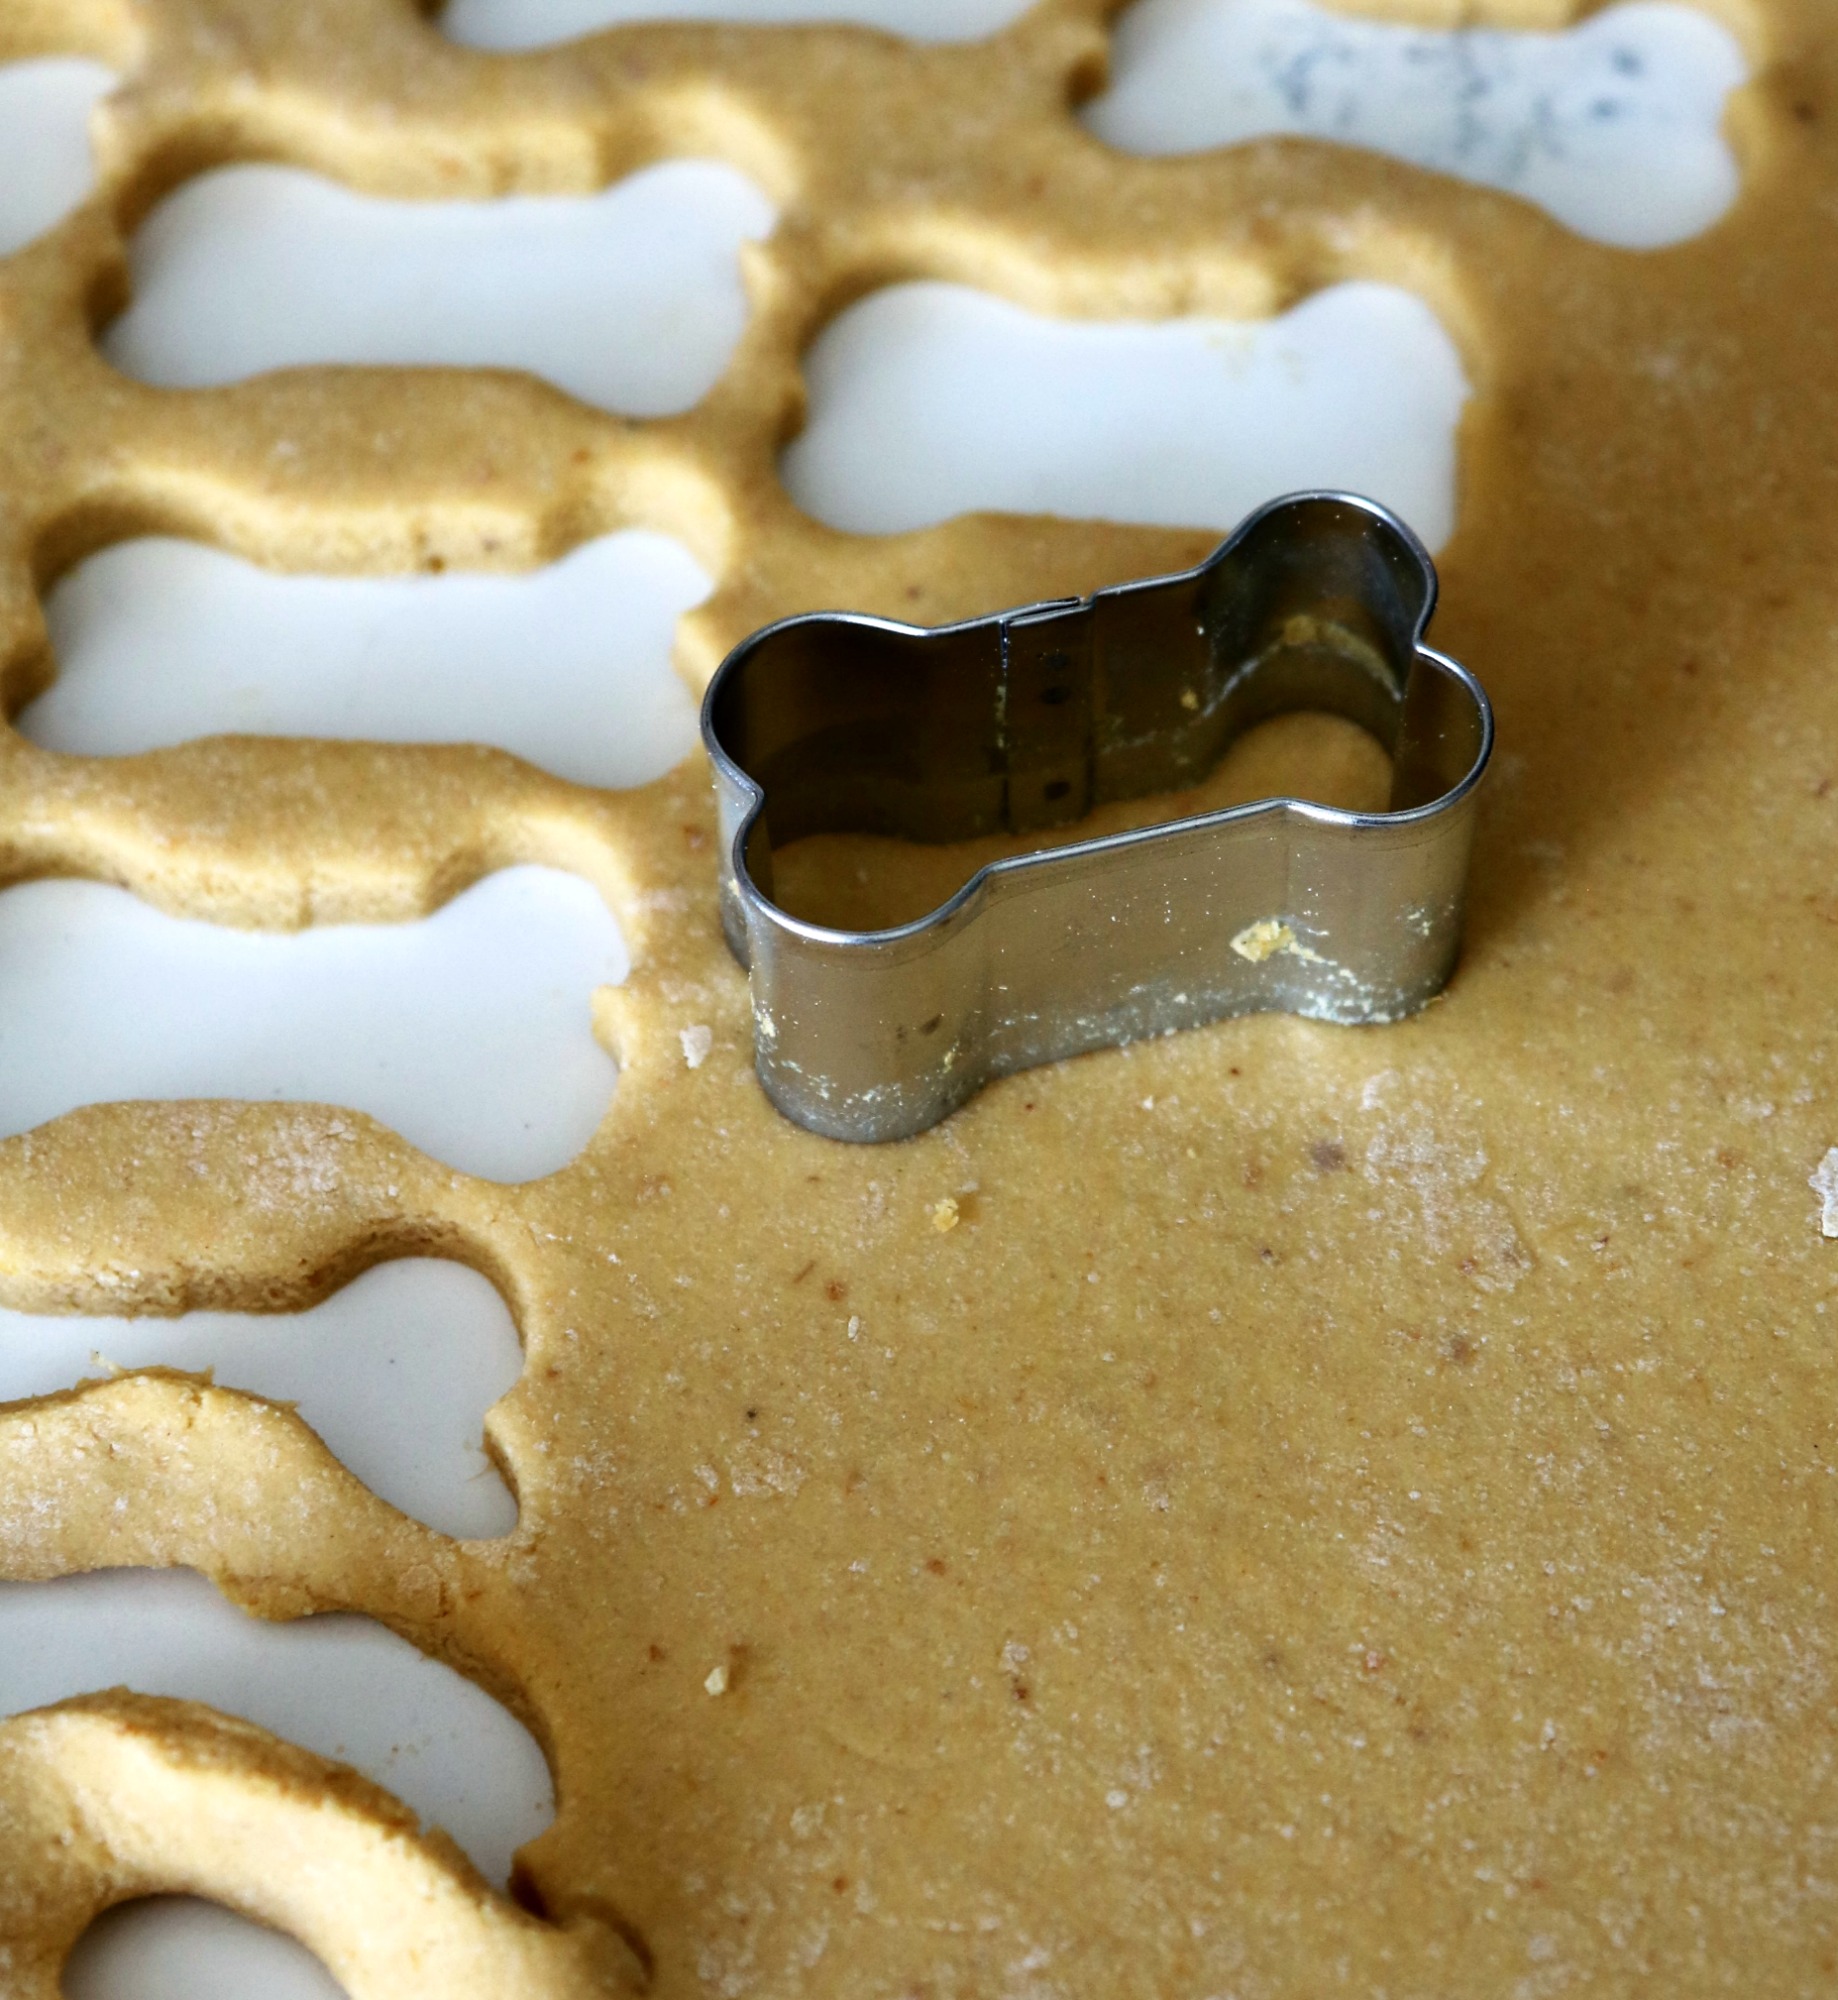 Bone shaped cookie cutter on dough for Pumpkin Banana Dog Treats